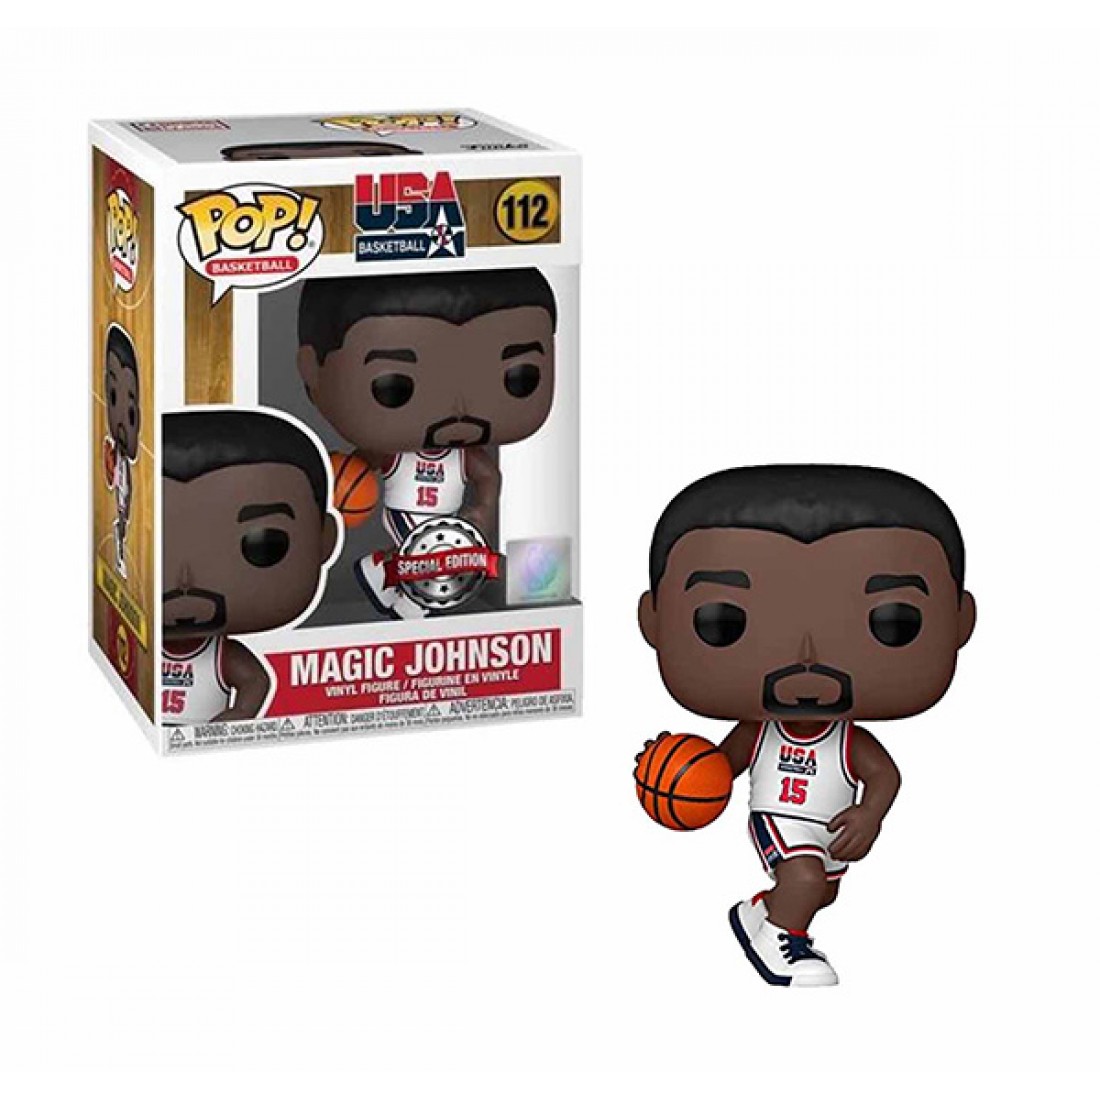 NBA (112) Magic Johnson (USA Basketball)